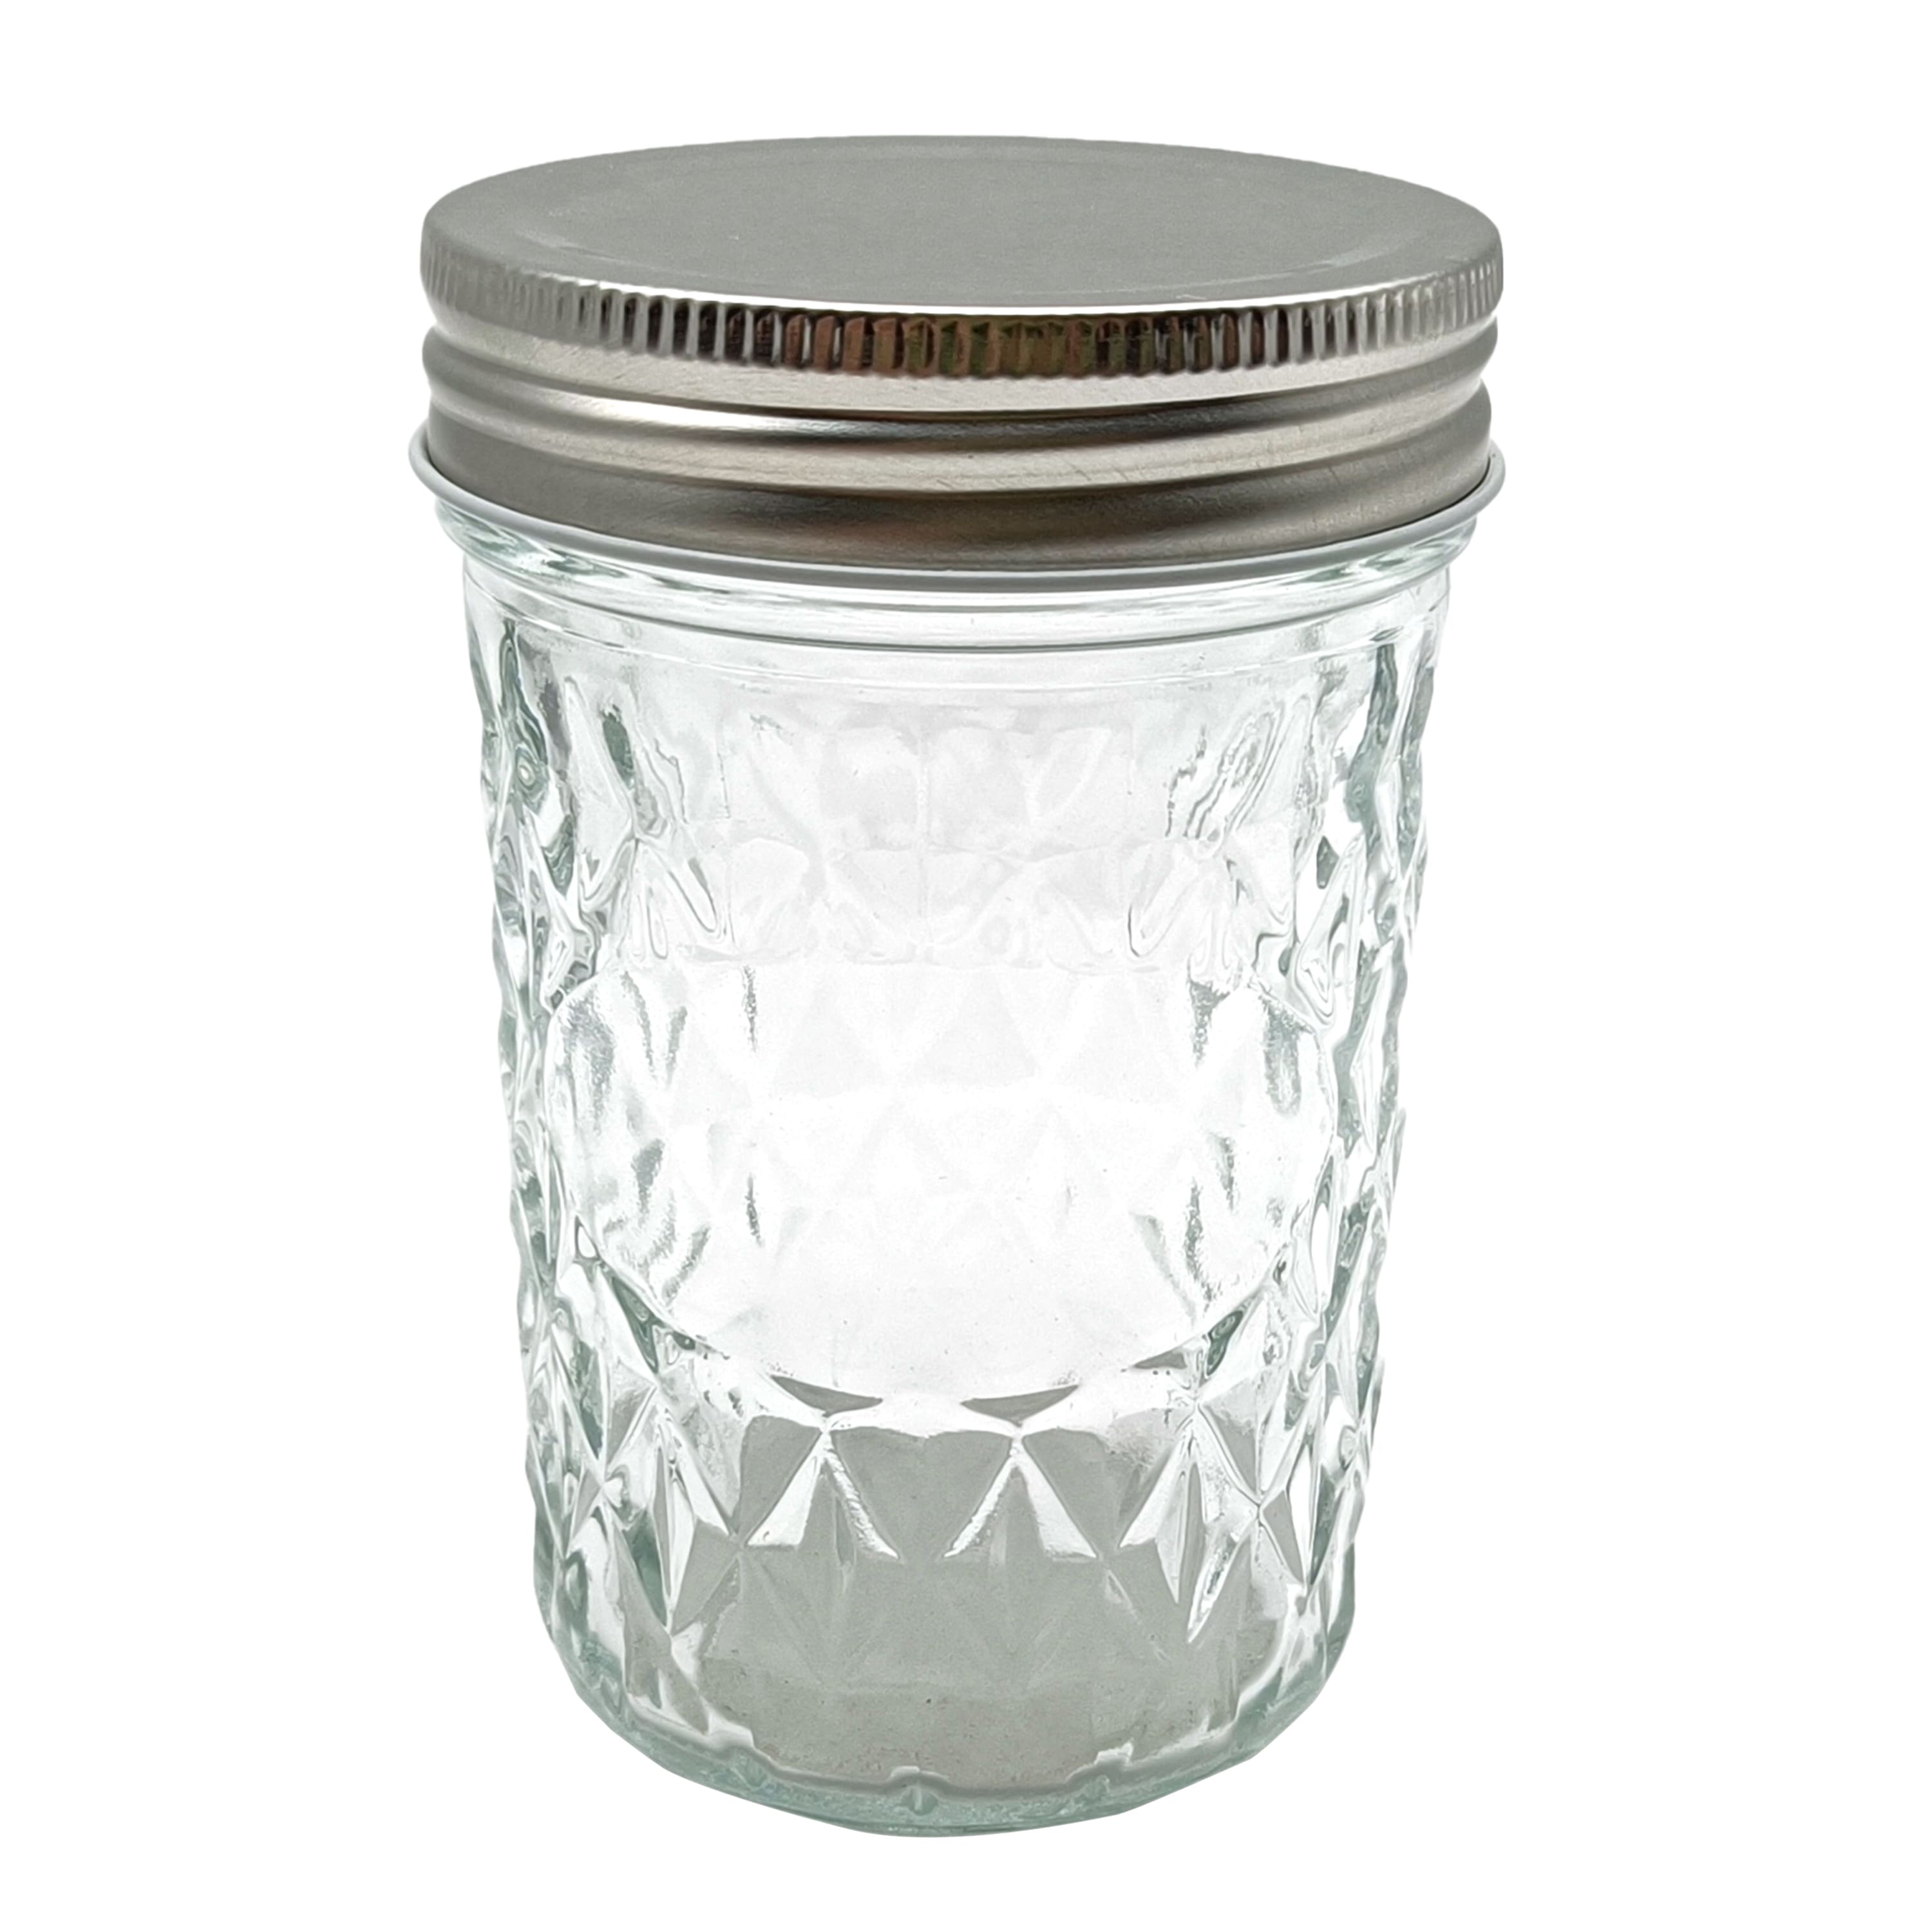 Regular & Wide-Mouth Mason Jars for Storage